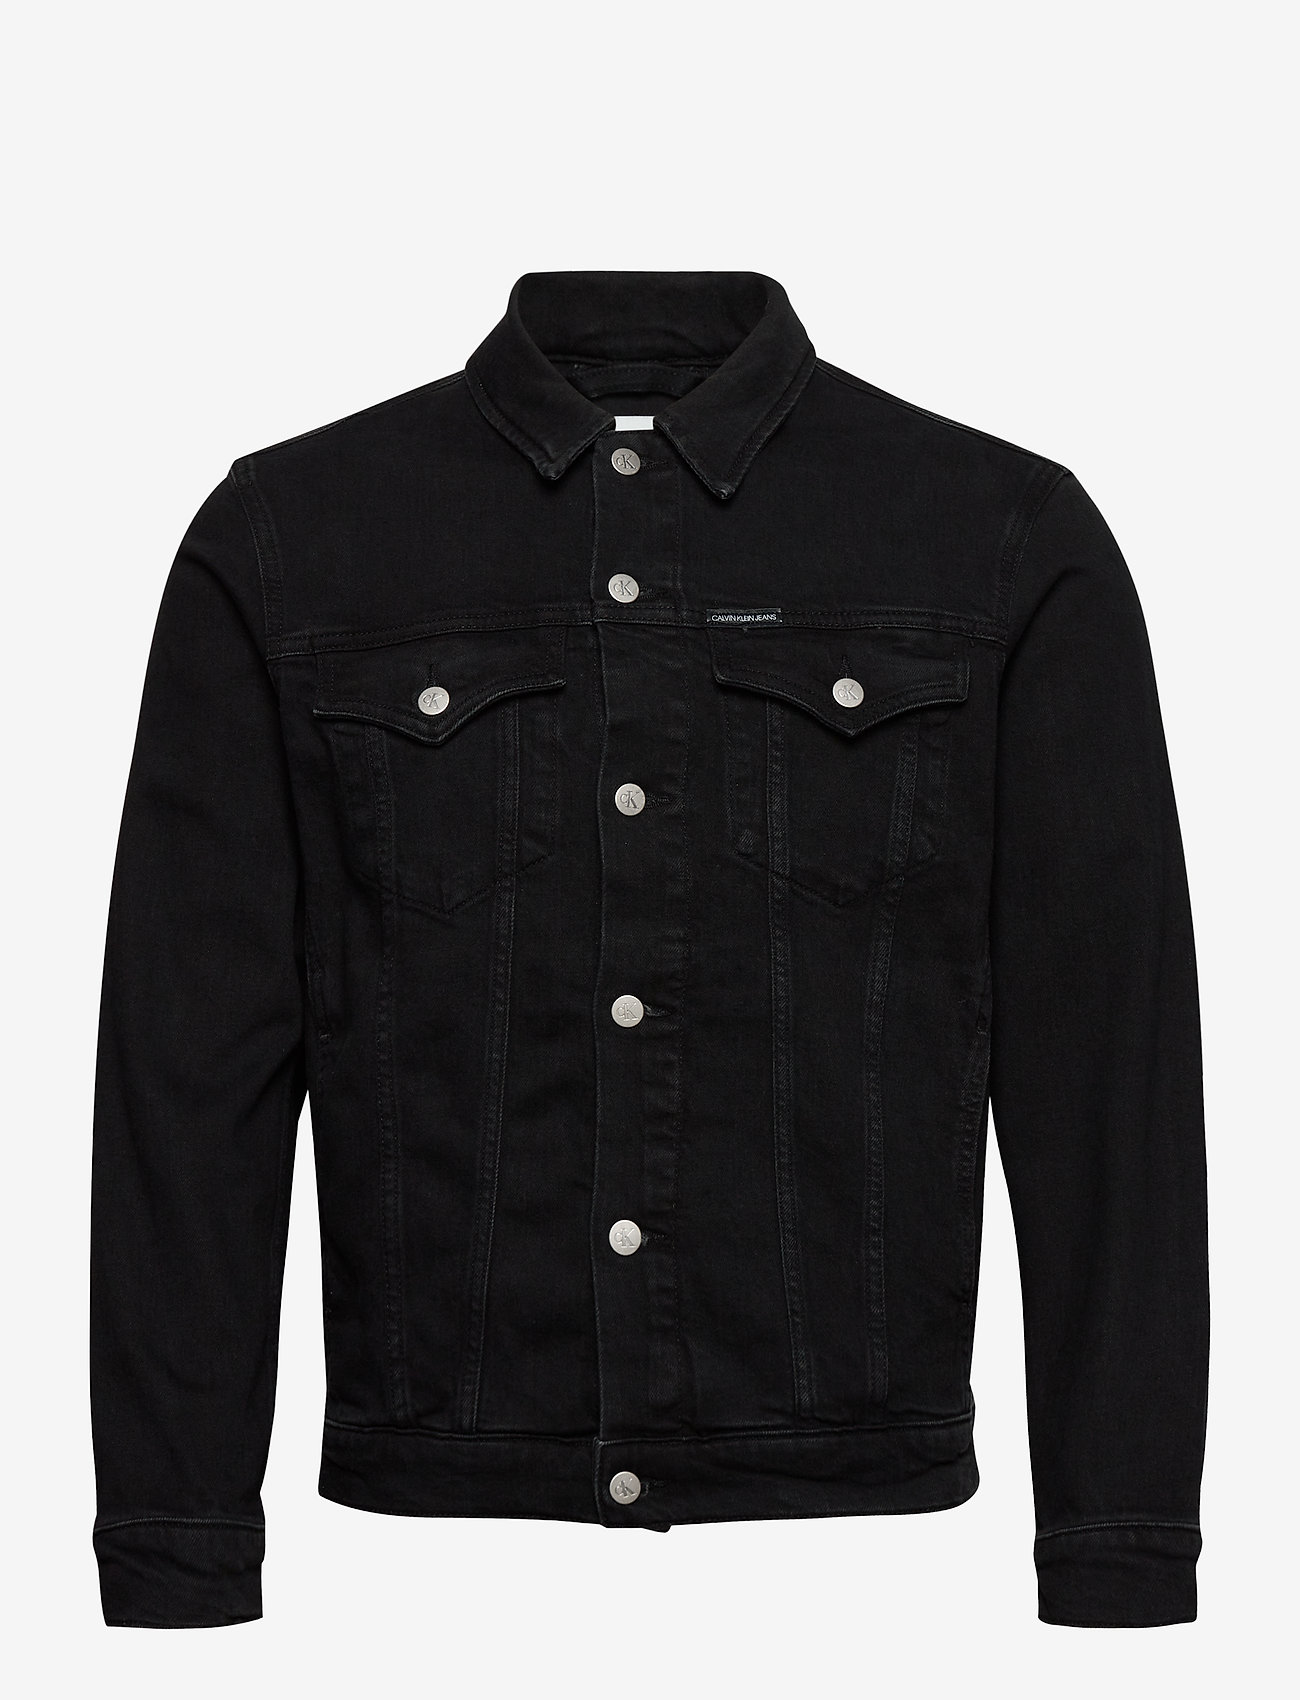 calvin klein jeans black jacket